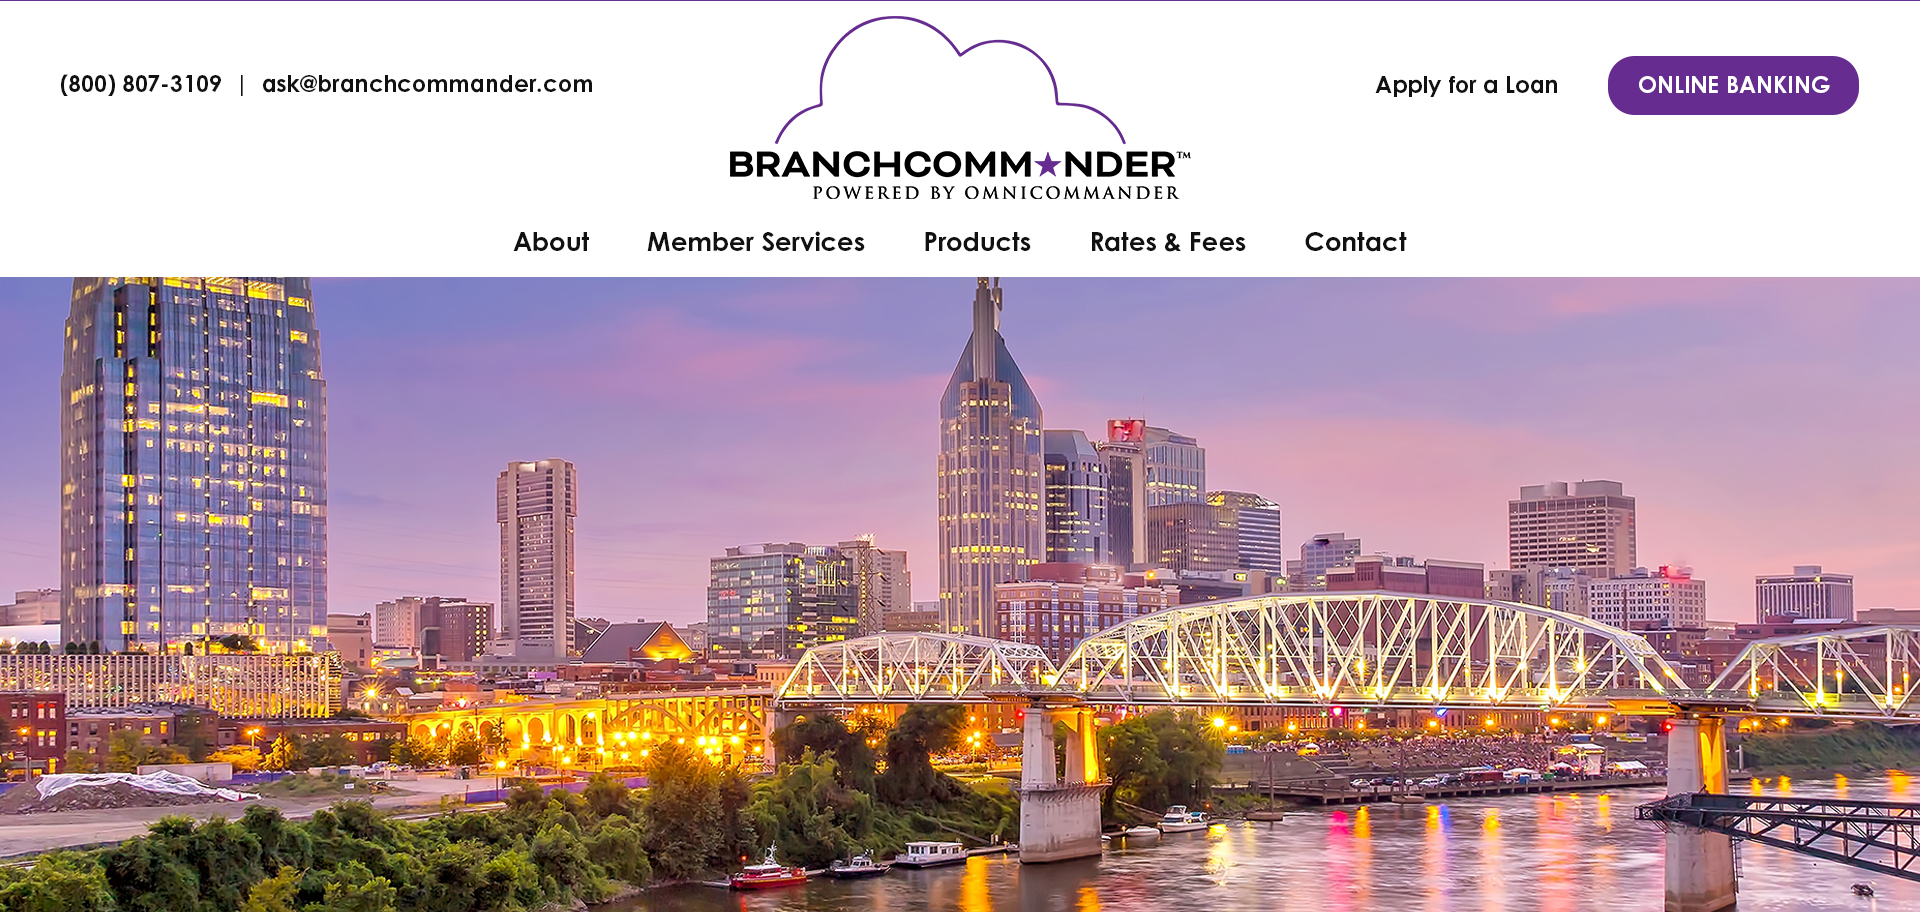 OMNICOMMANDER Digital Branch Website example